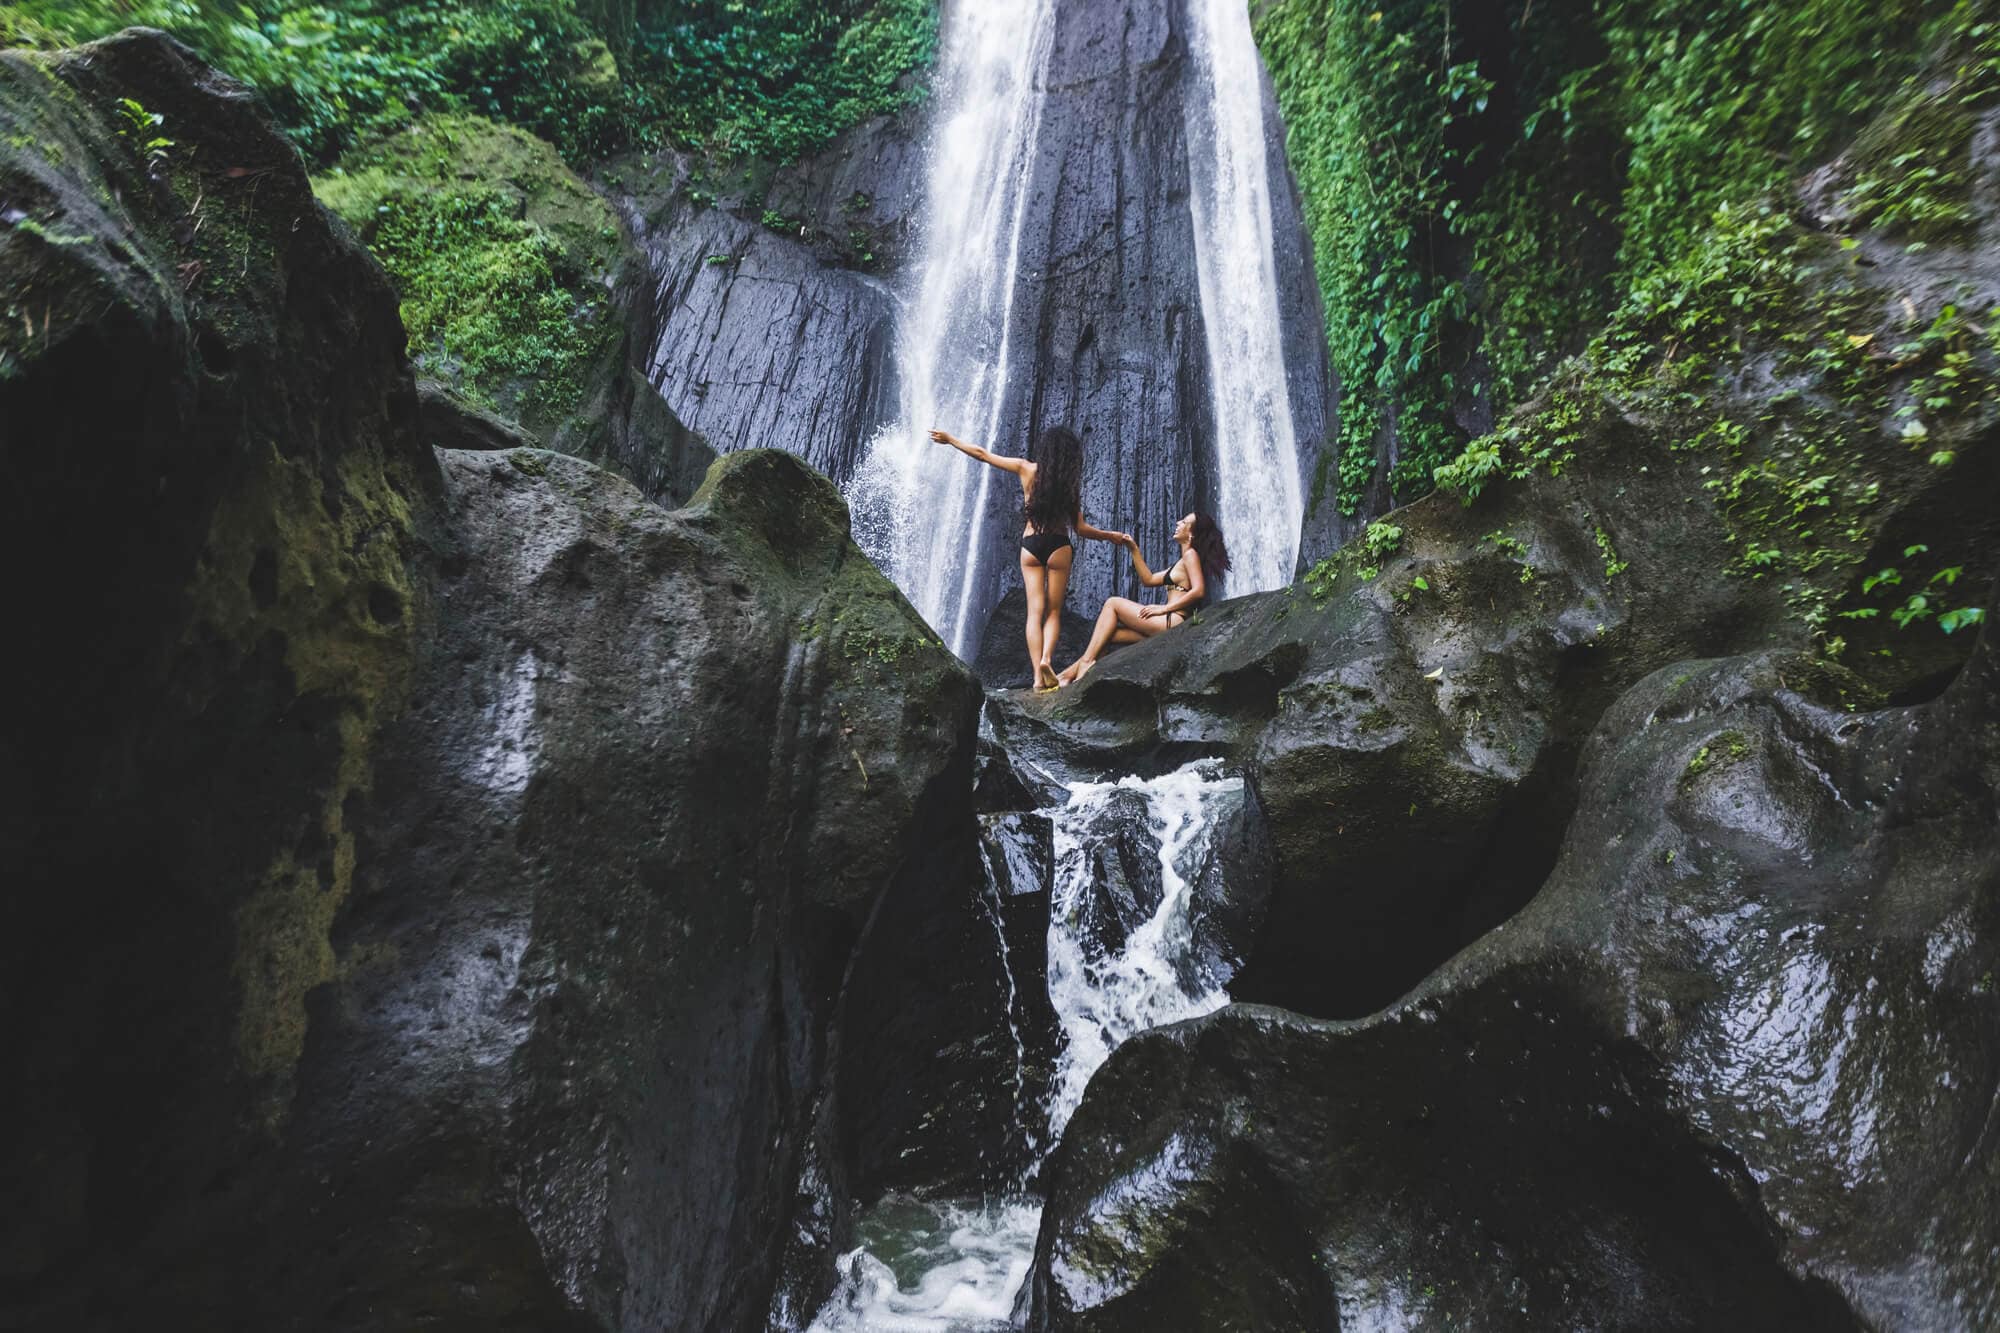 Dusun Kuning Waterfall - One of the best waterfalls in East Bali